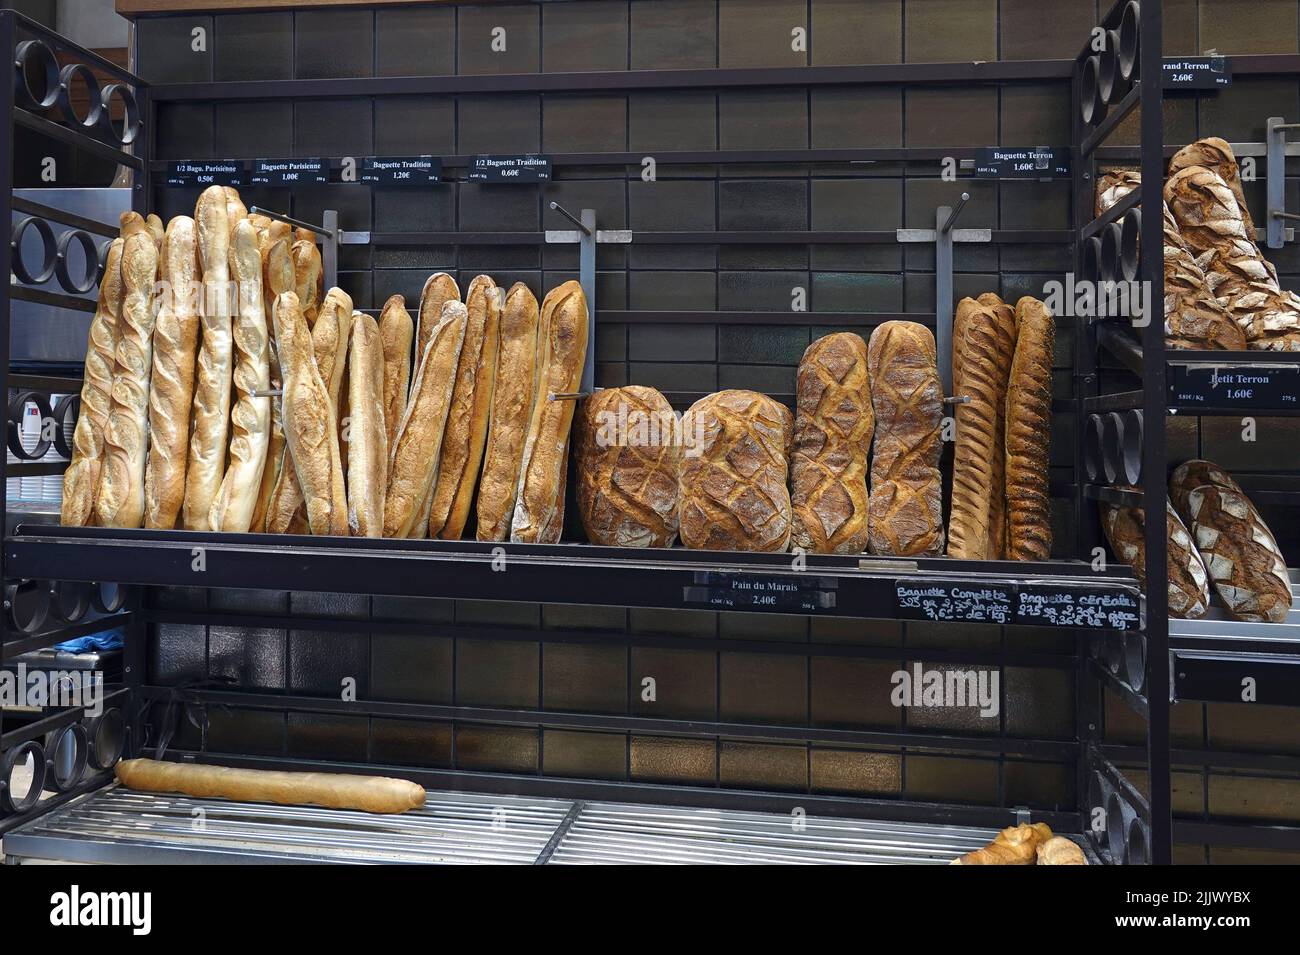 France, Paris, Fresh baguettes for sale at a boulangerie   Photo © Fabio Mazzarella/Sintesi/Alamy Stock Photo Stock Photo